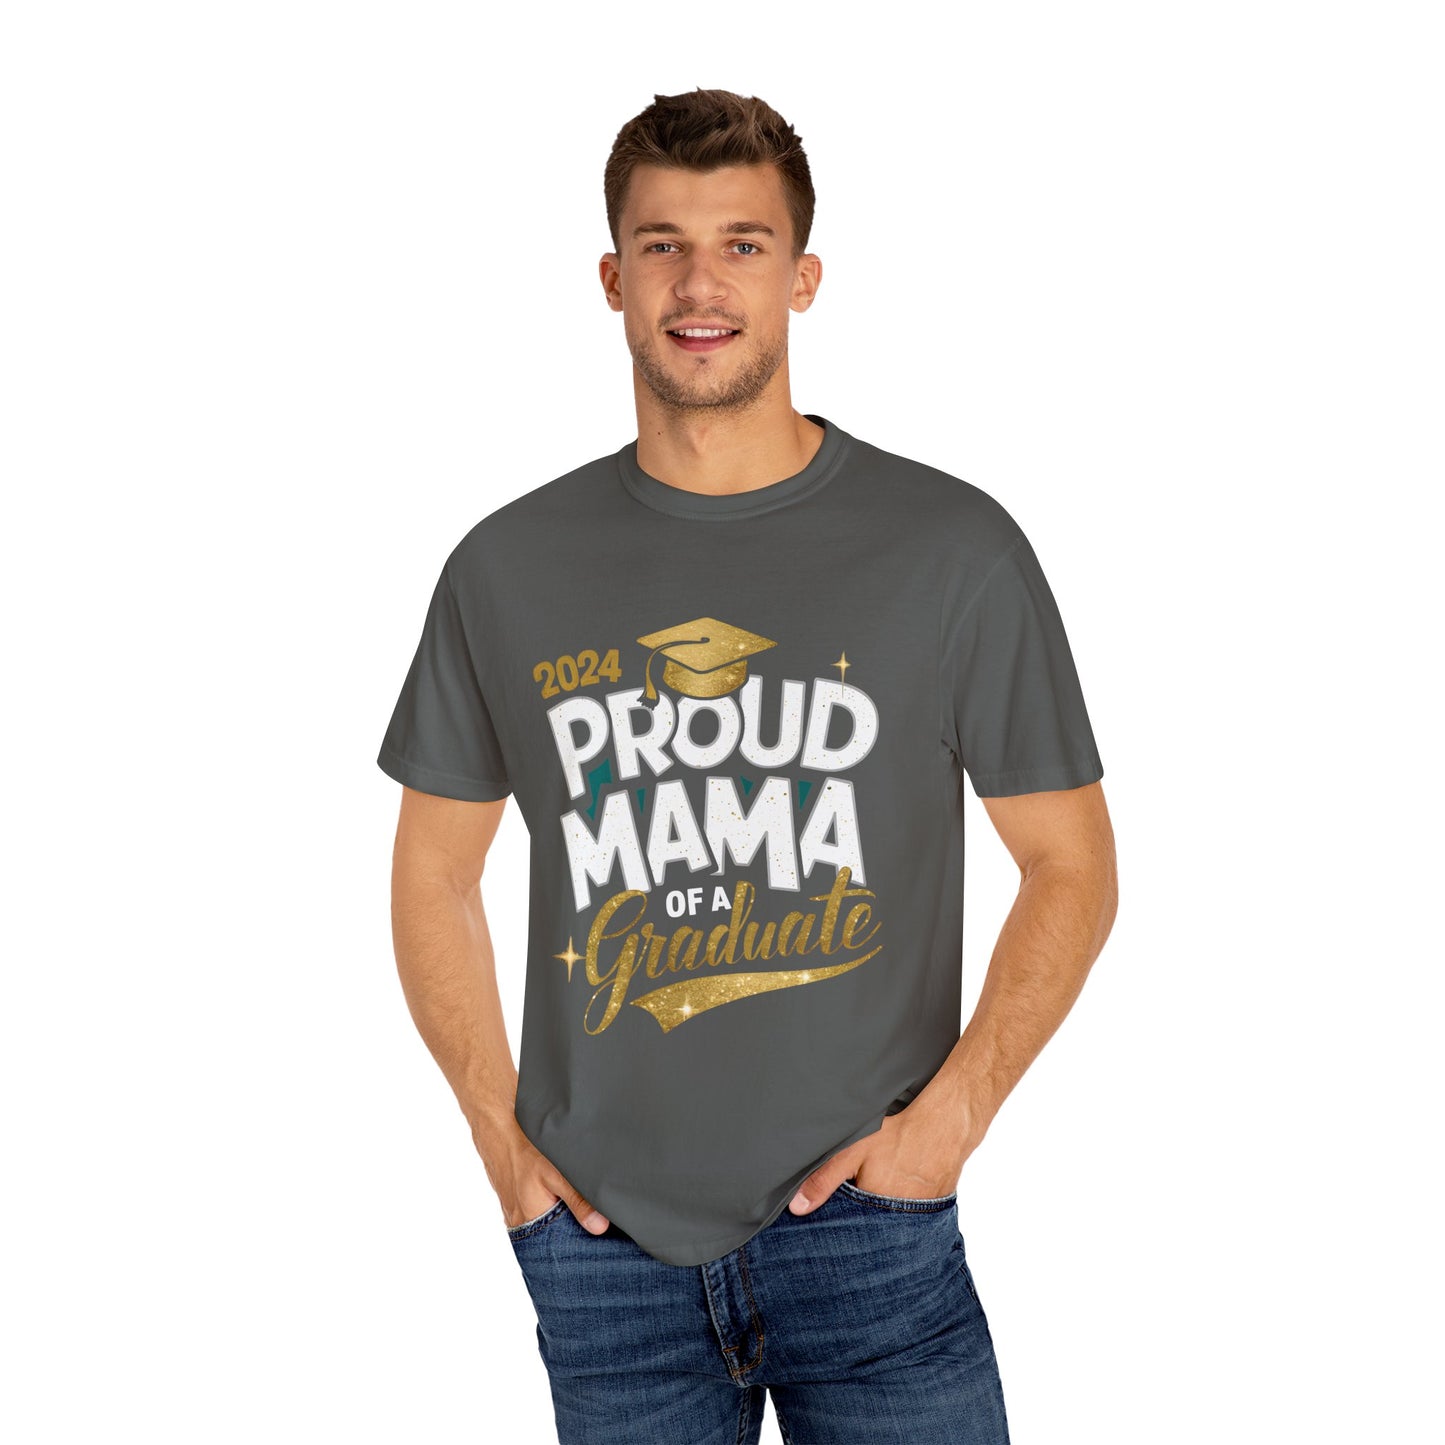 Proud Mama of a 2024 Graduate Unisex Garment-dyed T-shirt Cotton Funny Humorous Graphic Soft Premium Unisex Men Women Pepper T-shirt Birthday Gift-51